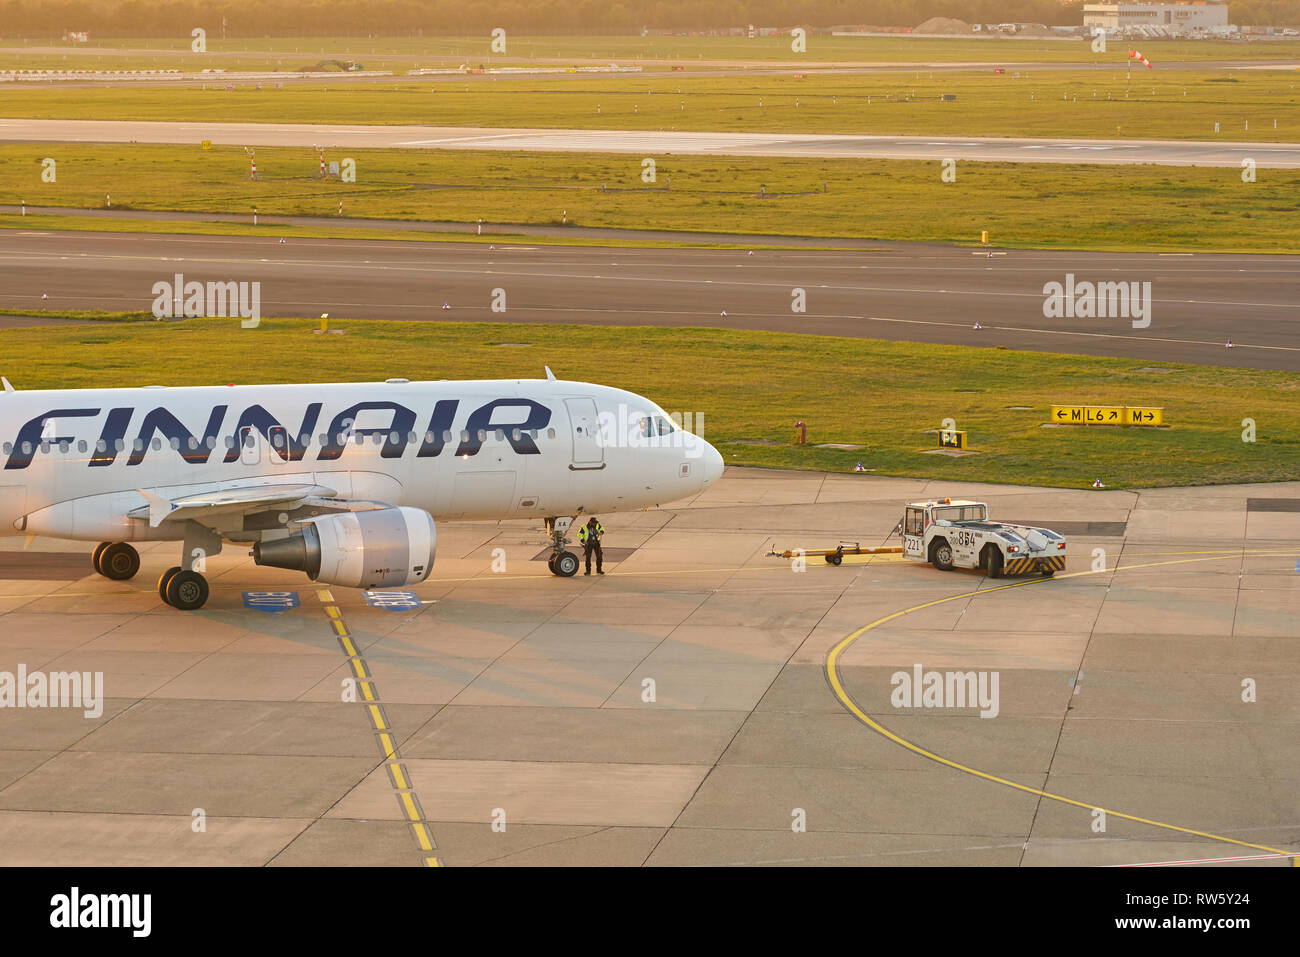 DUSSELDORF, GERMANY - CIRCA OCTOBER, 2018: Finnair airplane at Dusseldorf Airport. Stock Photo